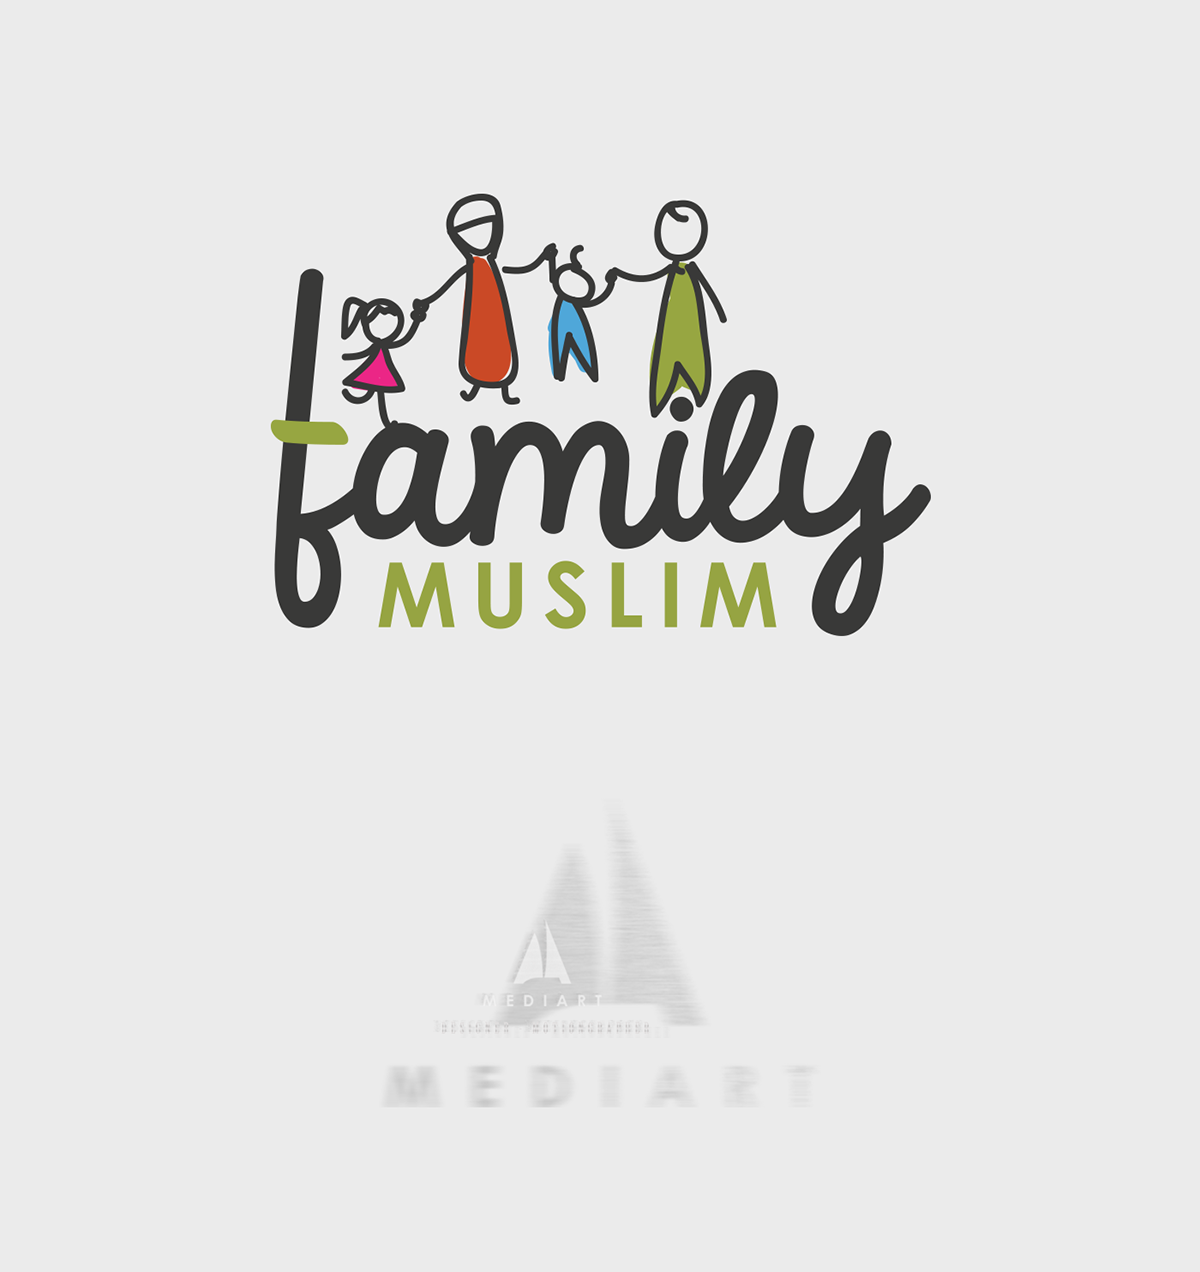 LOGO FAMILY MUSLIM